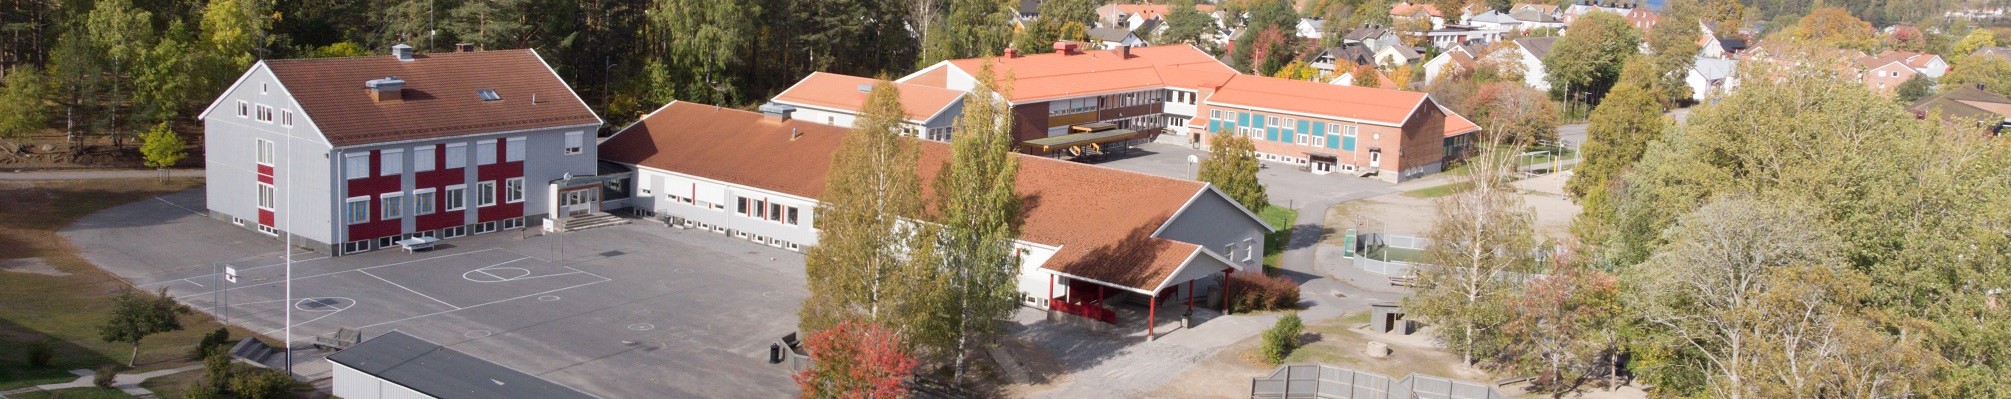 Marker kommune Marker skole 